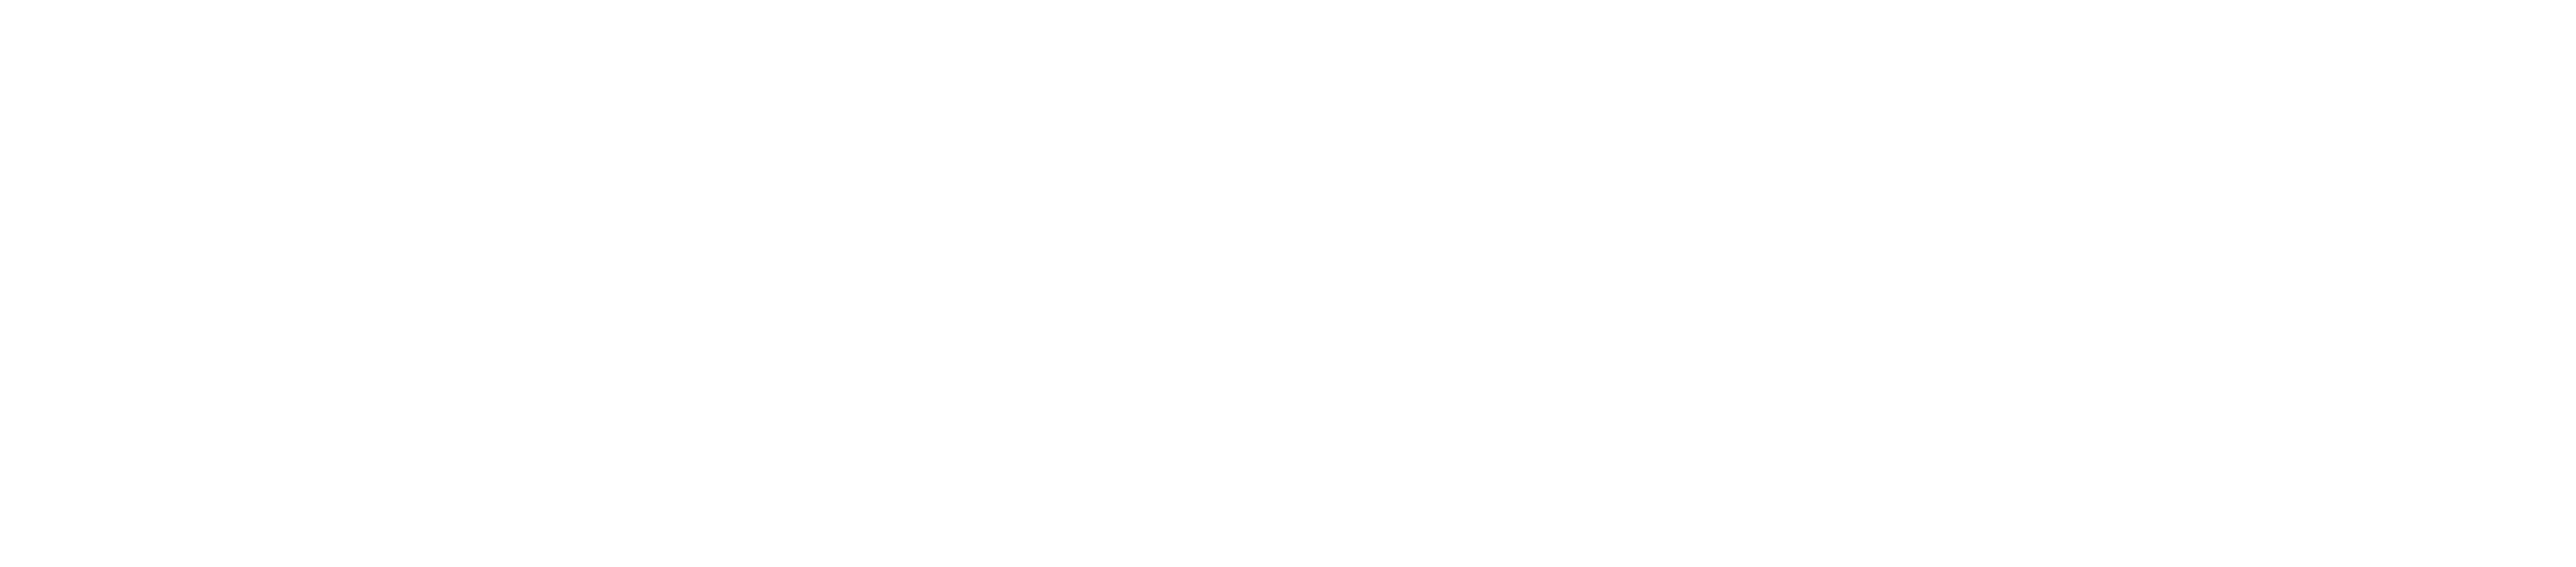 AgileData.io logo